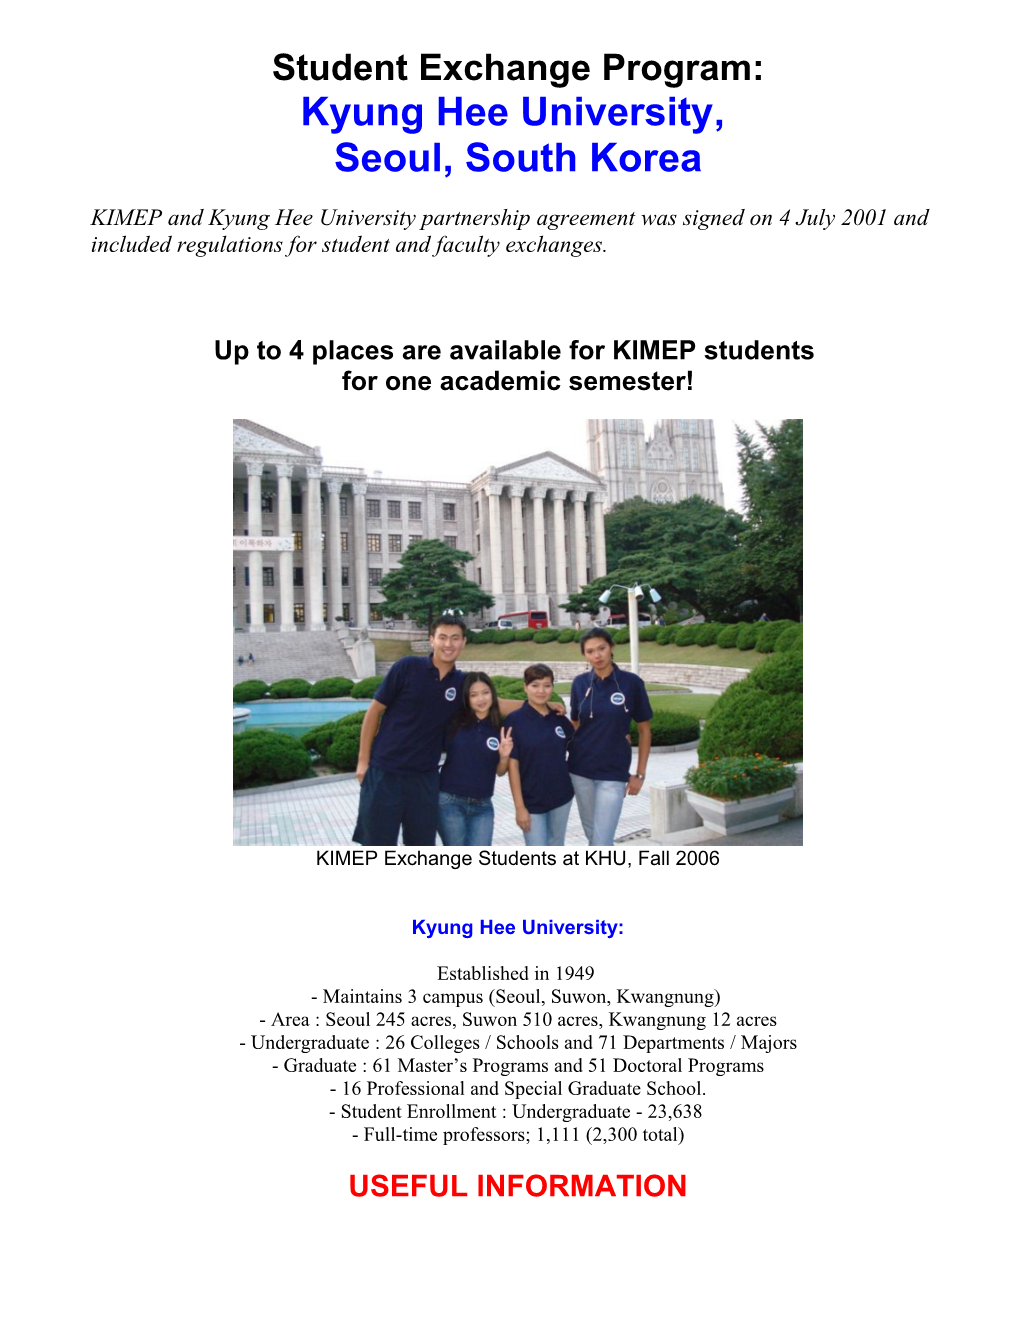 Student Exchange Program: Kyung Hee University, Seoul, South Korea